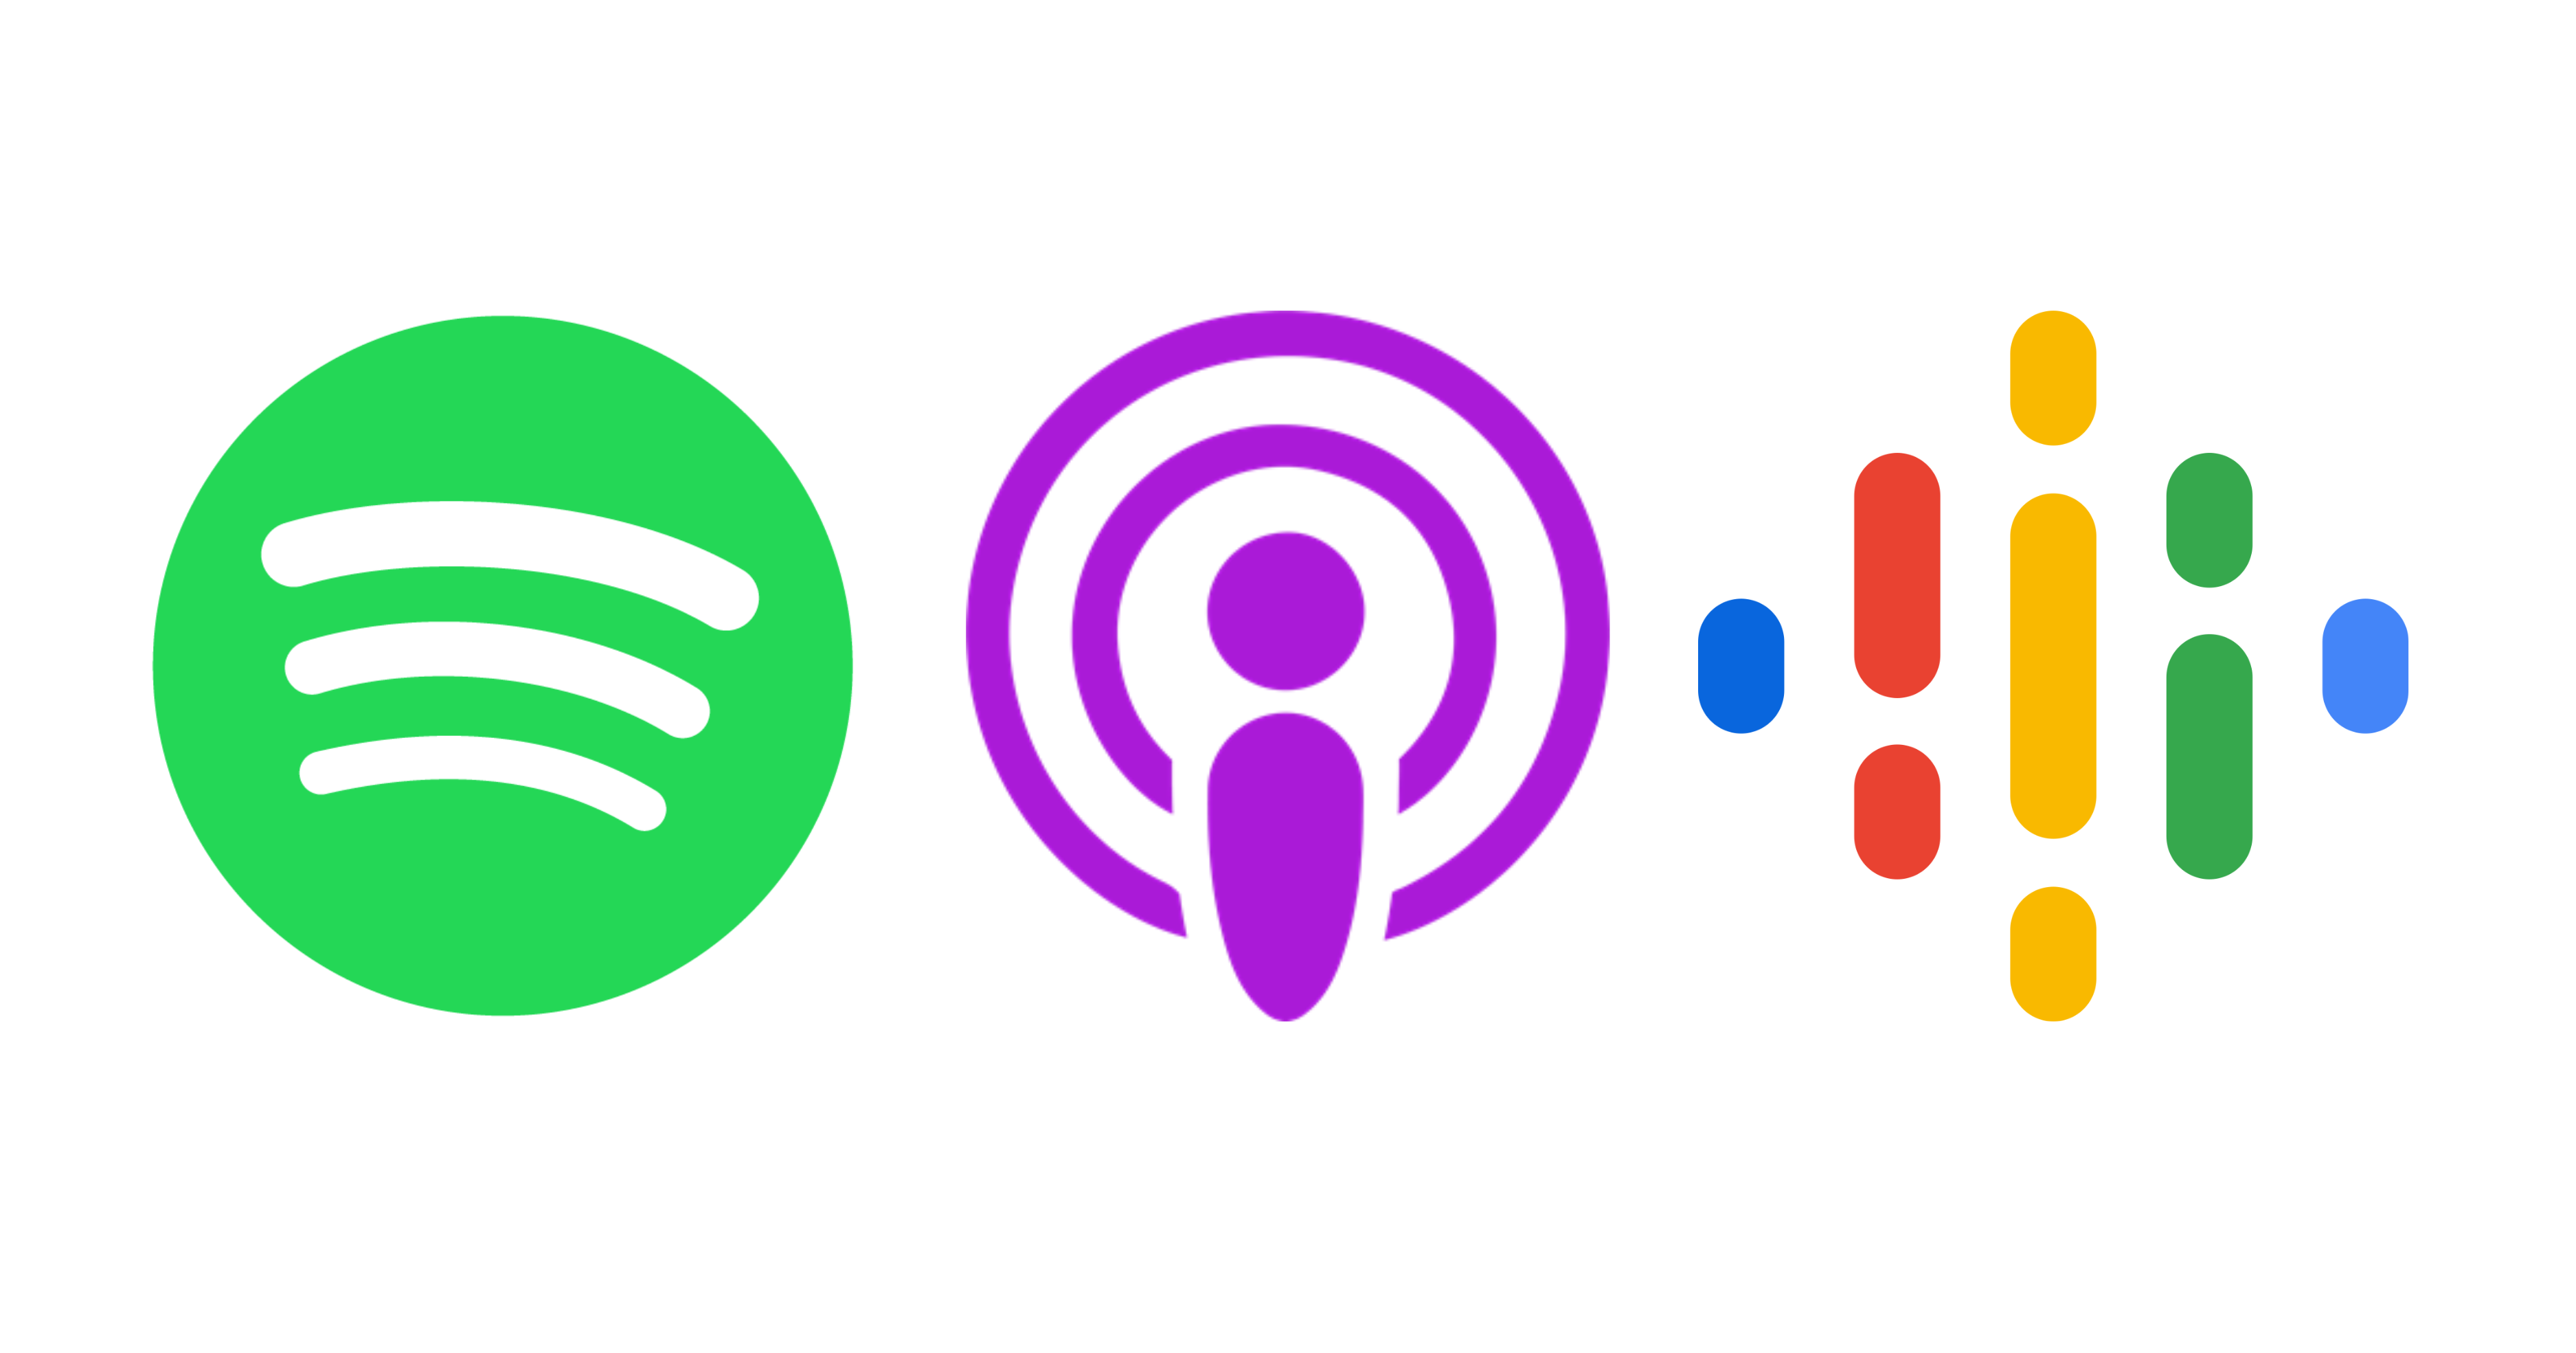 Image podcast logos